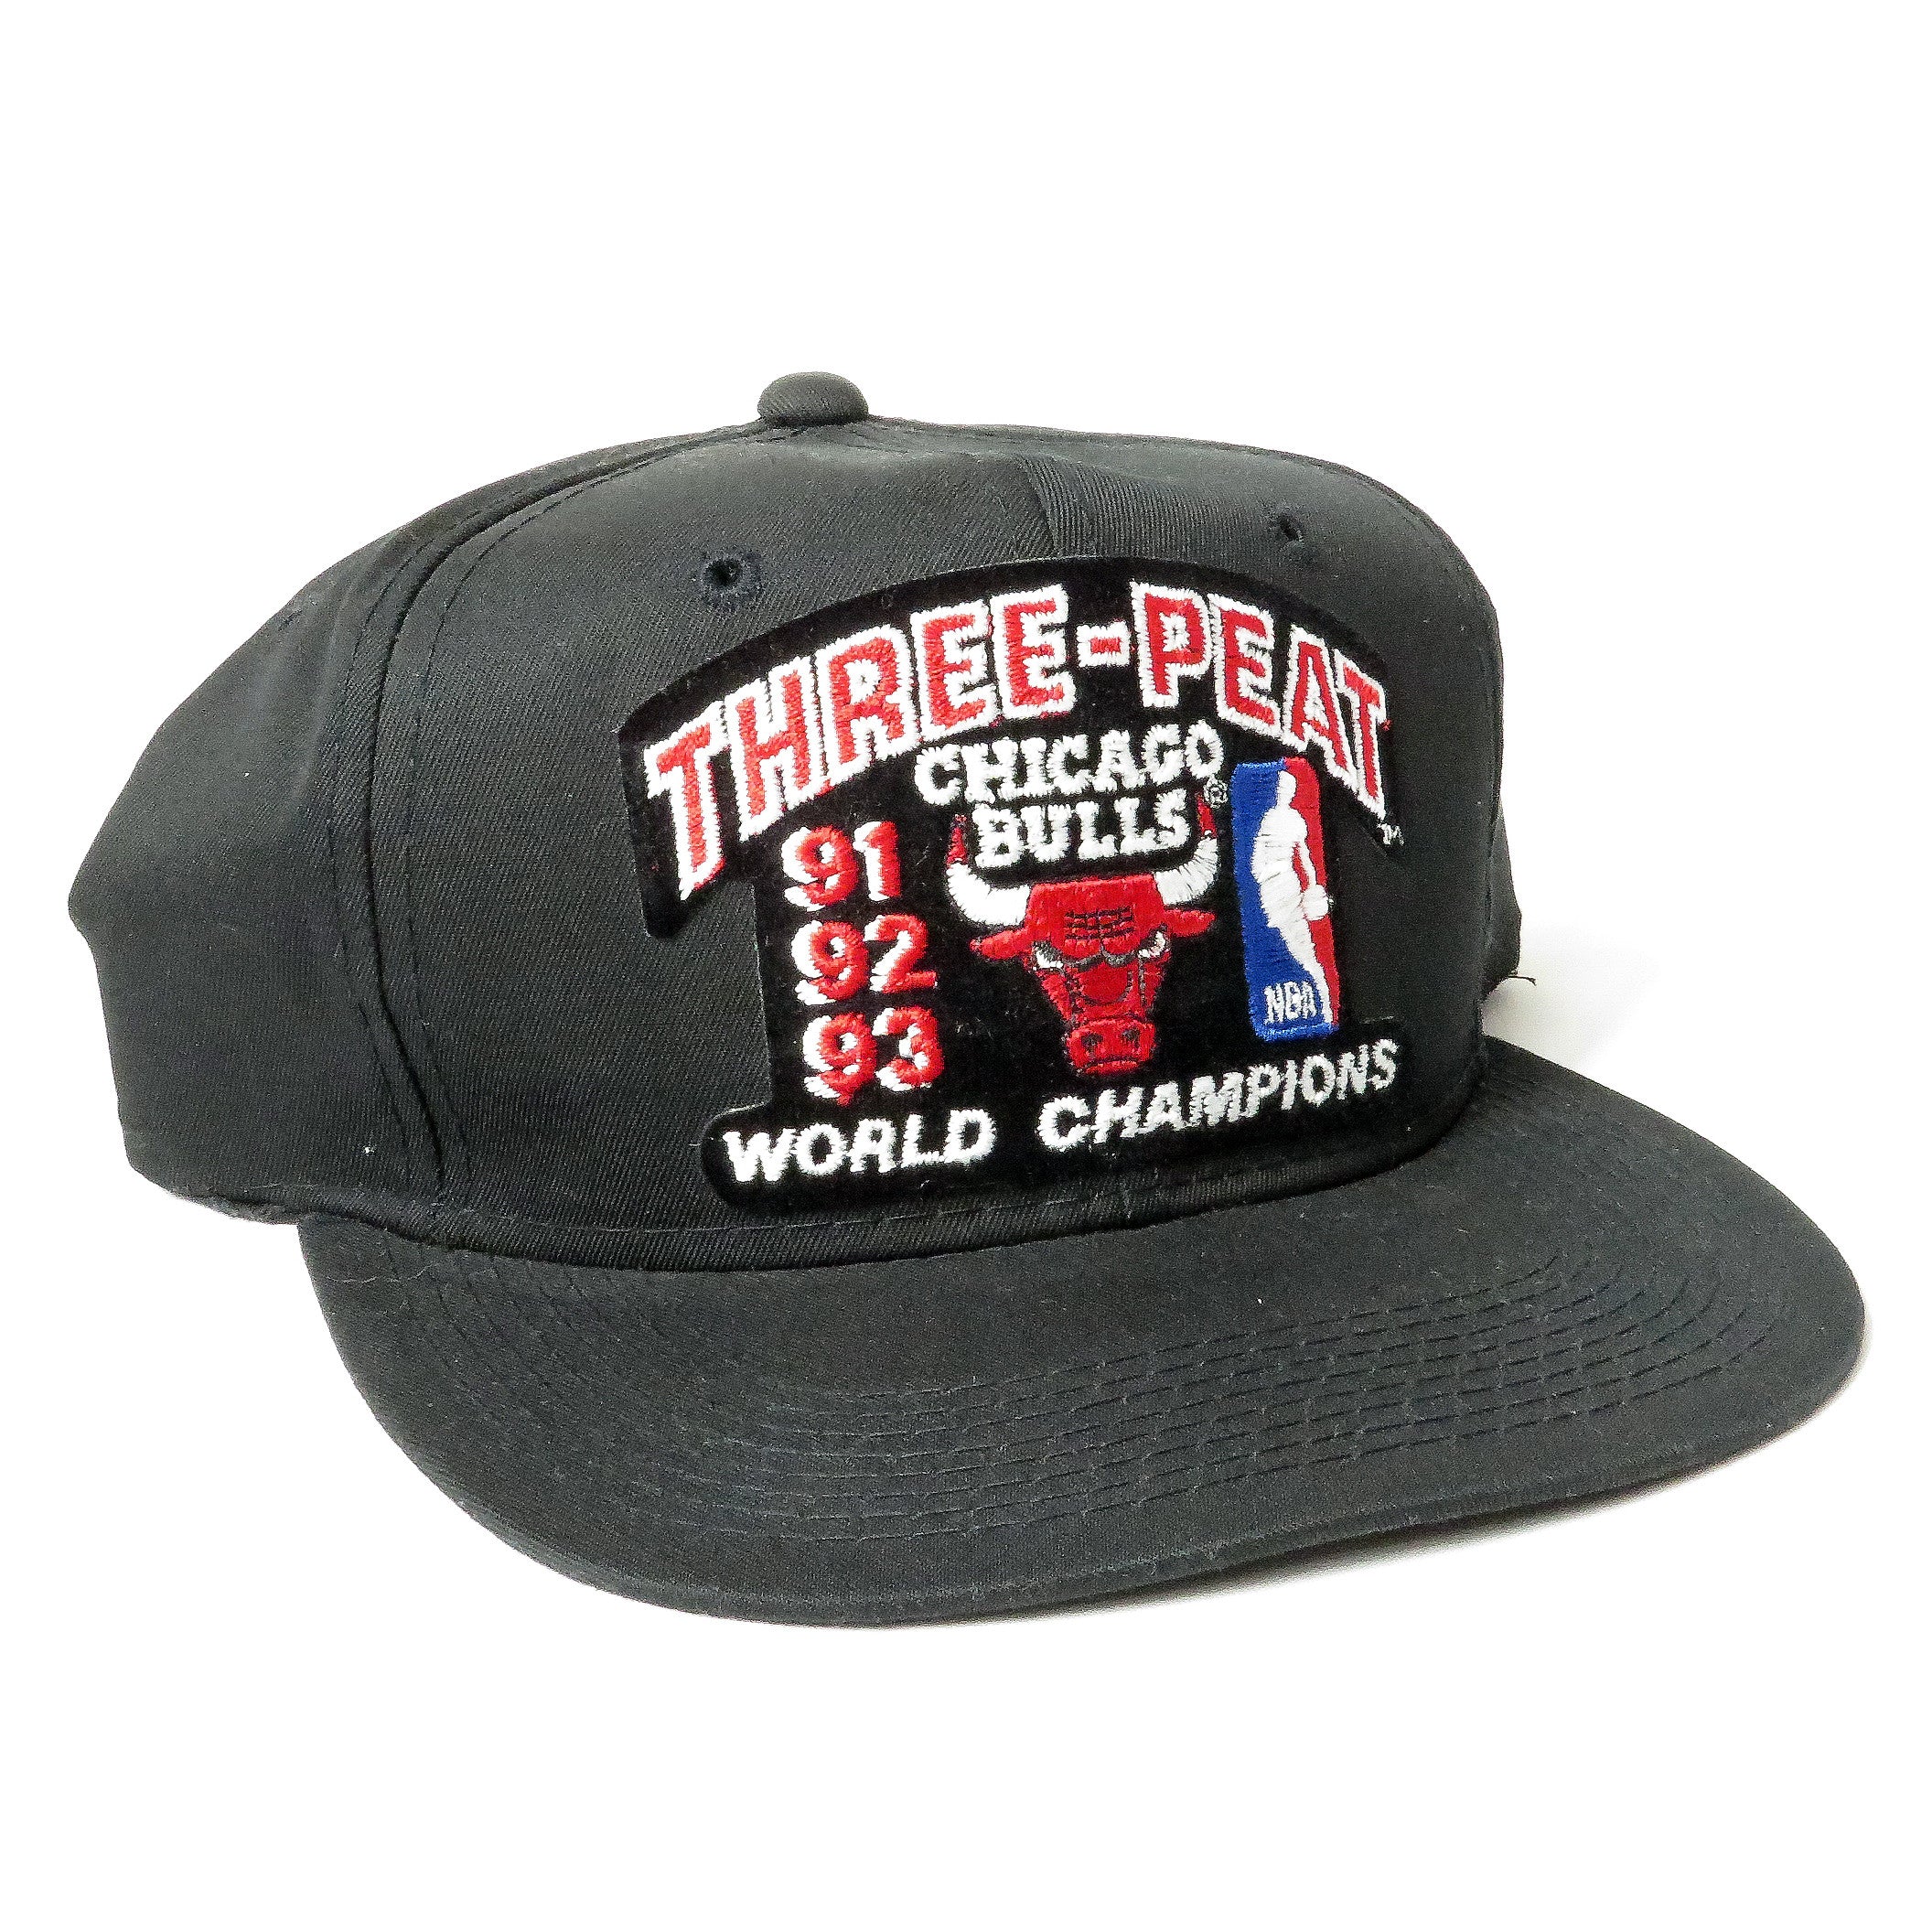 Vintage Chicago Bulls Three Peat World Champions Snapback Hat